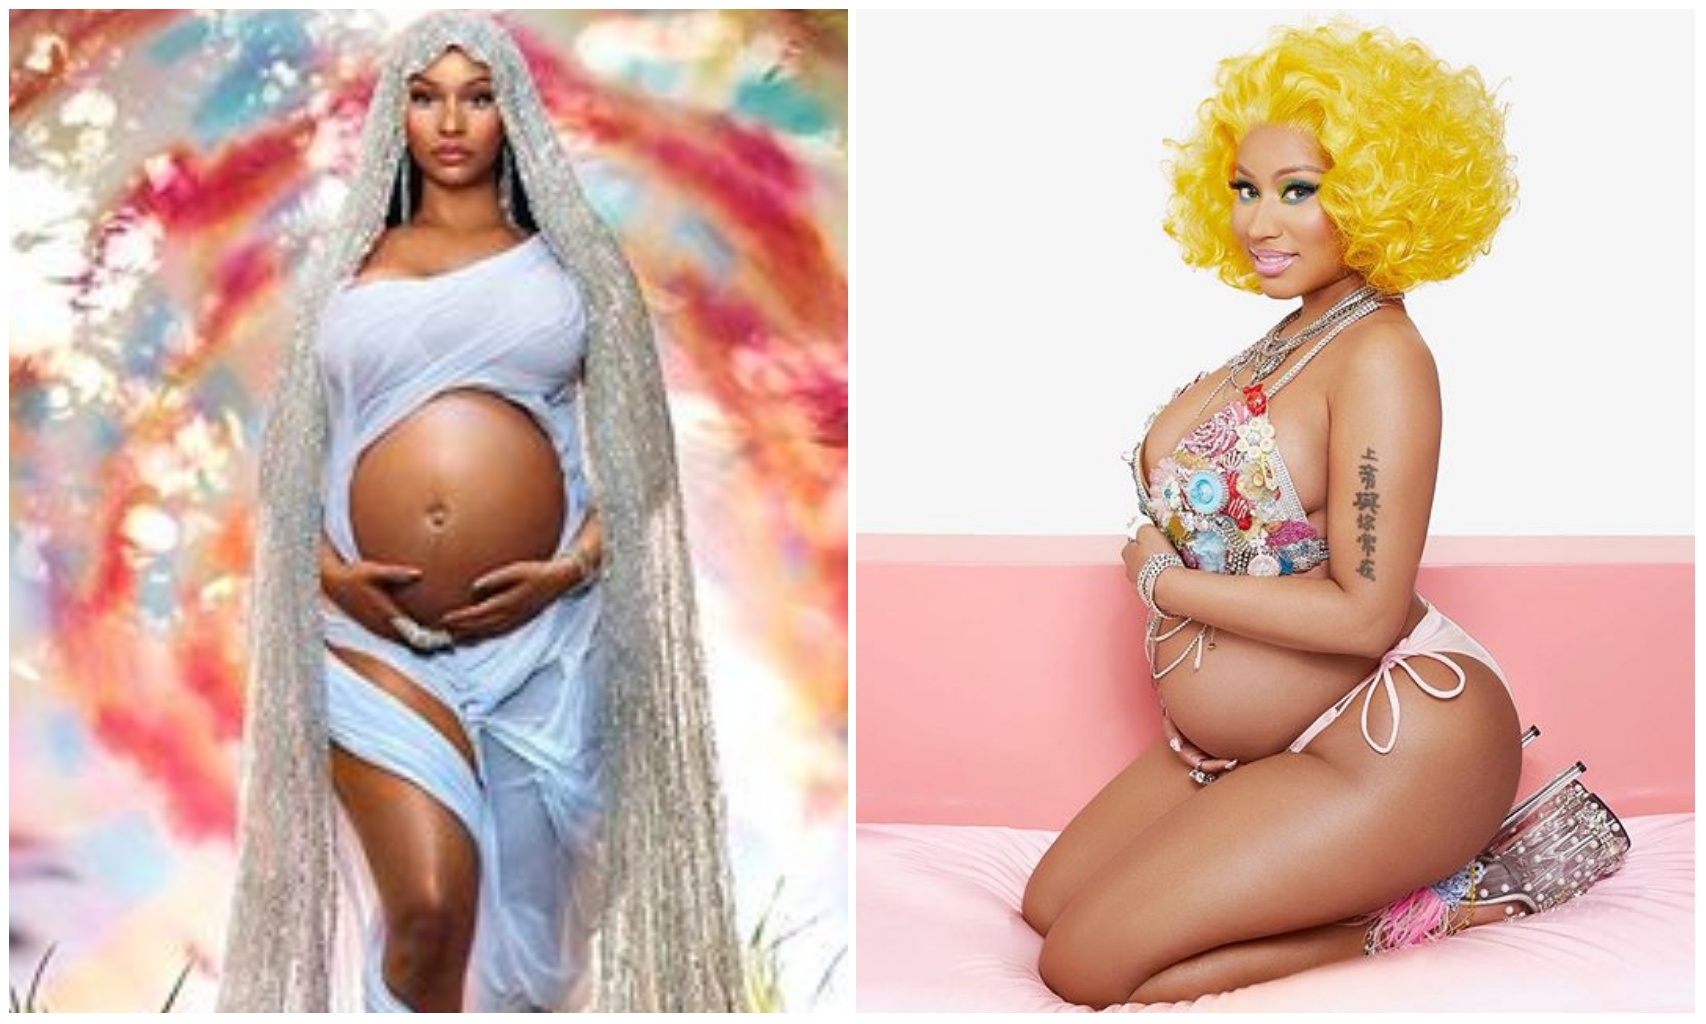 Nicki Minaj set to welcome first child with husband, flaunts baby bump (Photos)